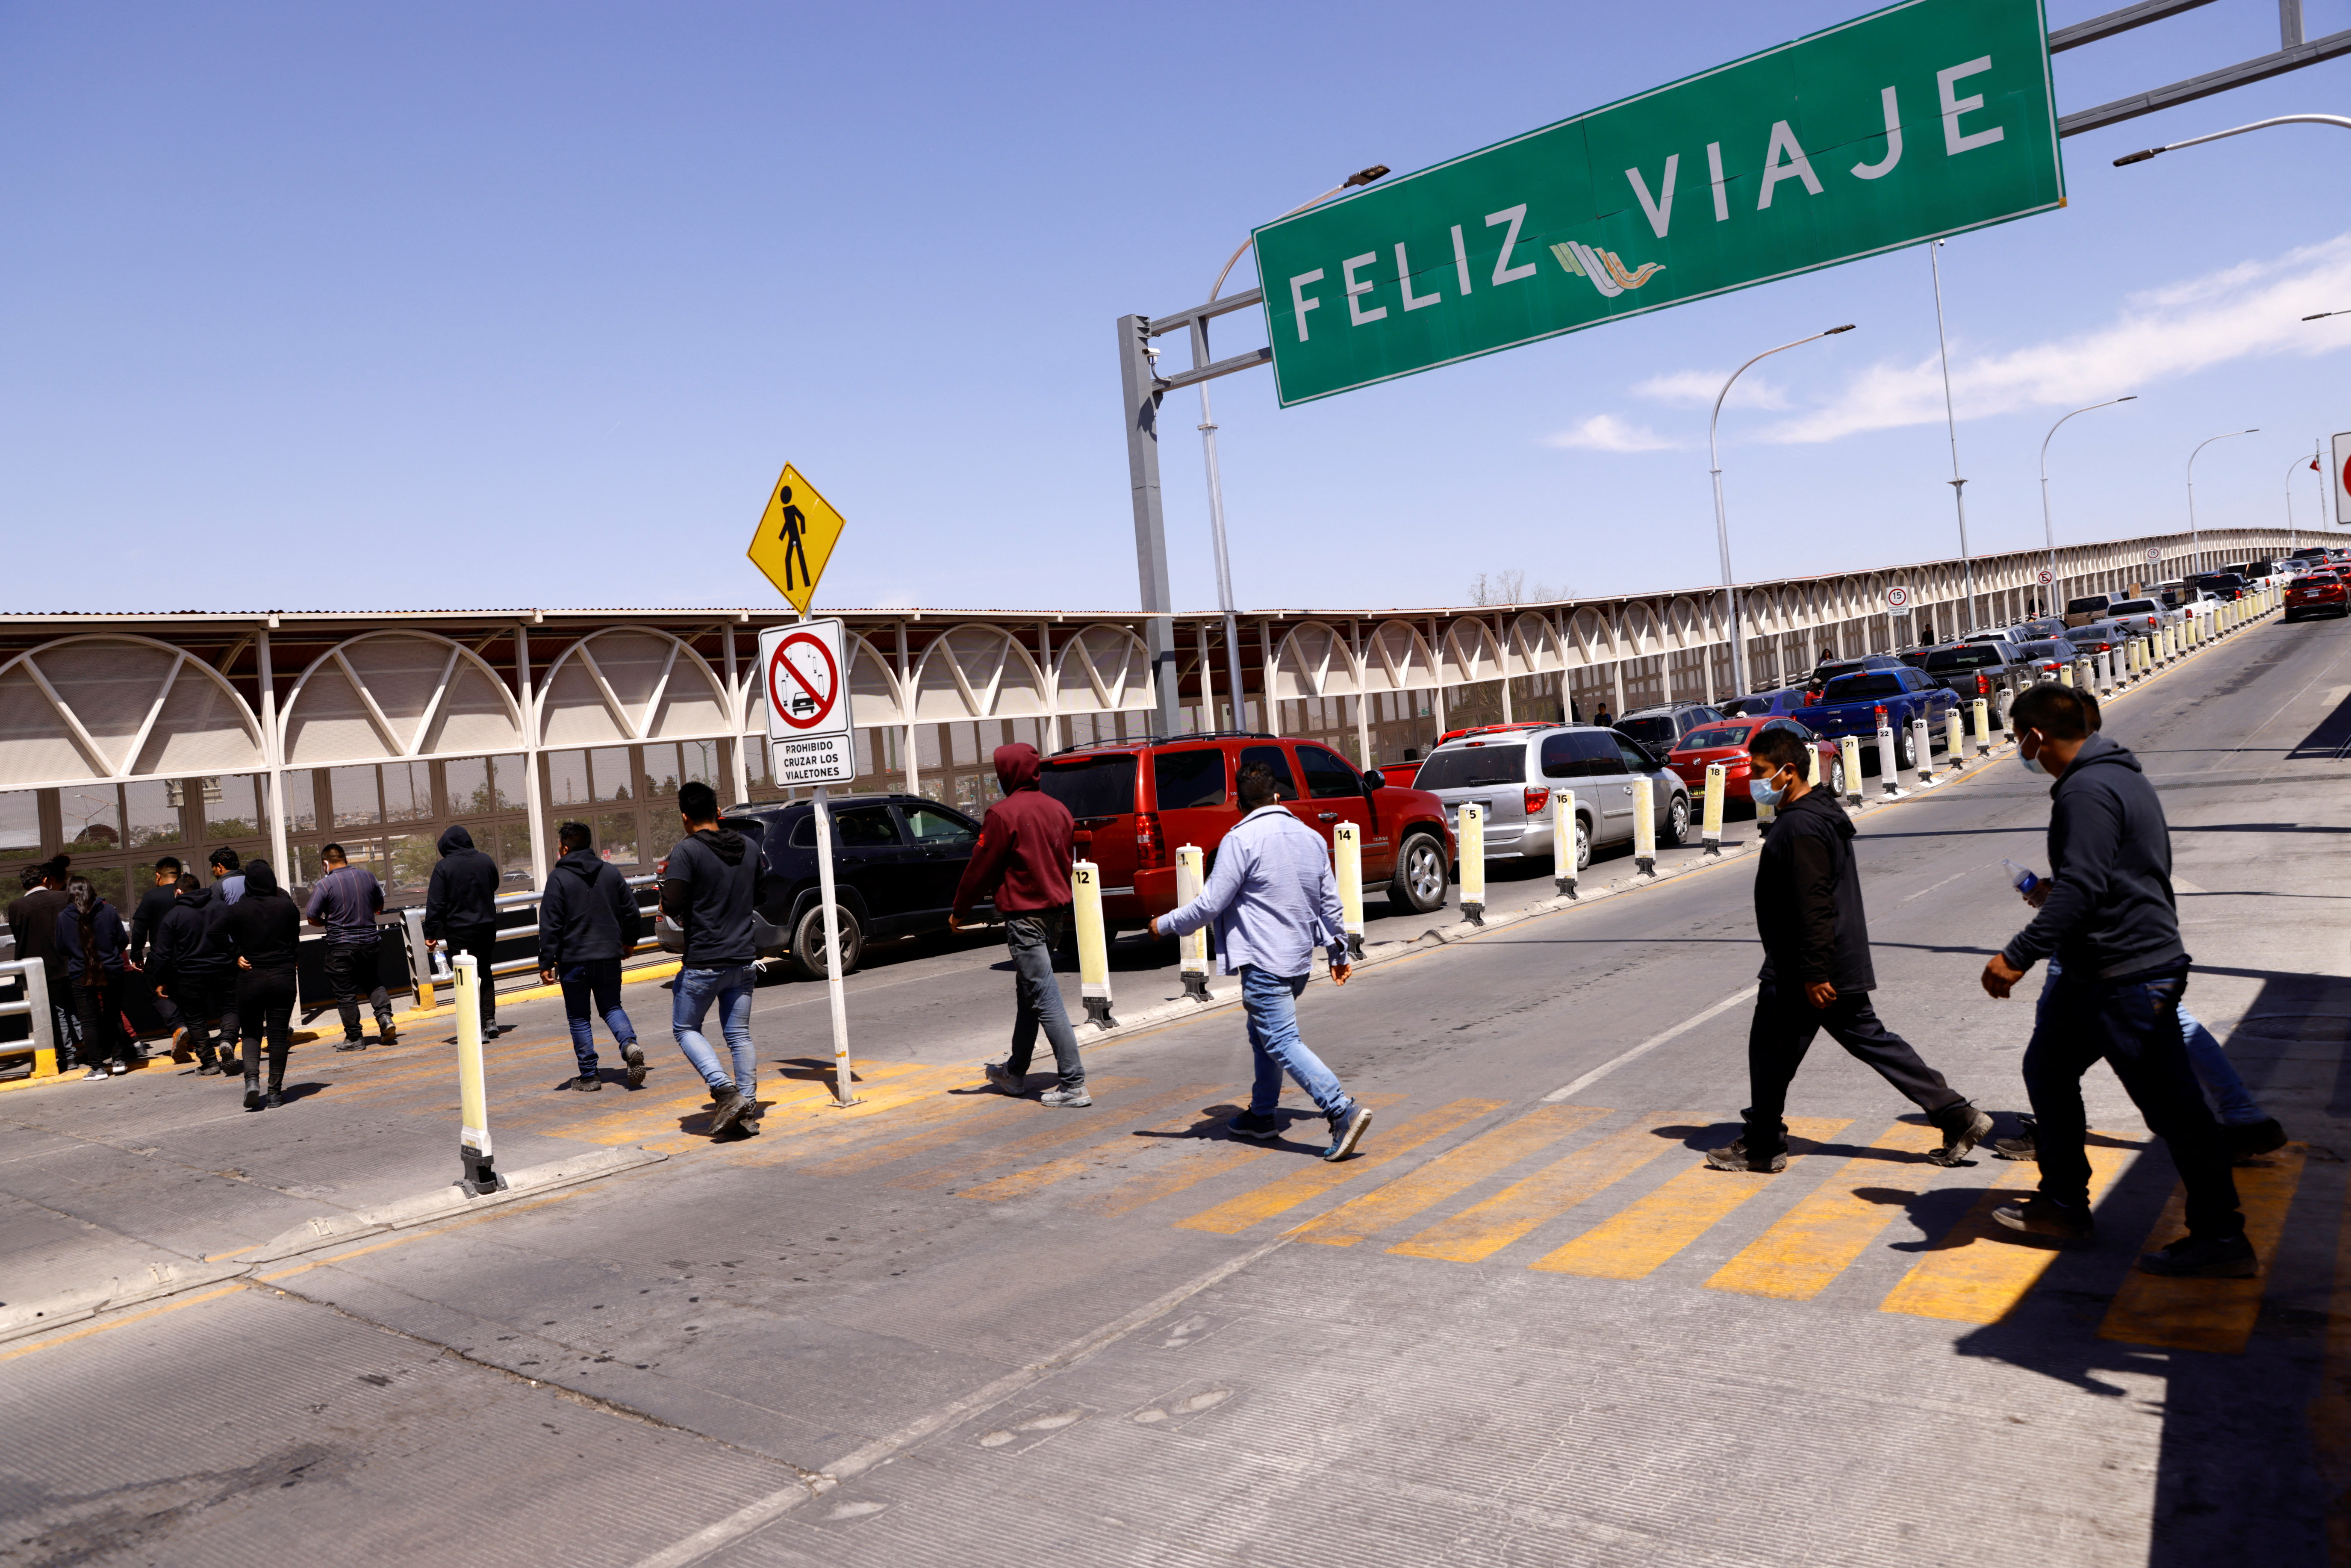 Migrants expelled from U.S. and sent back to Mexico walk across border bridge in Ciudad Juarez